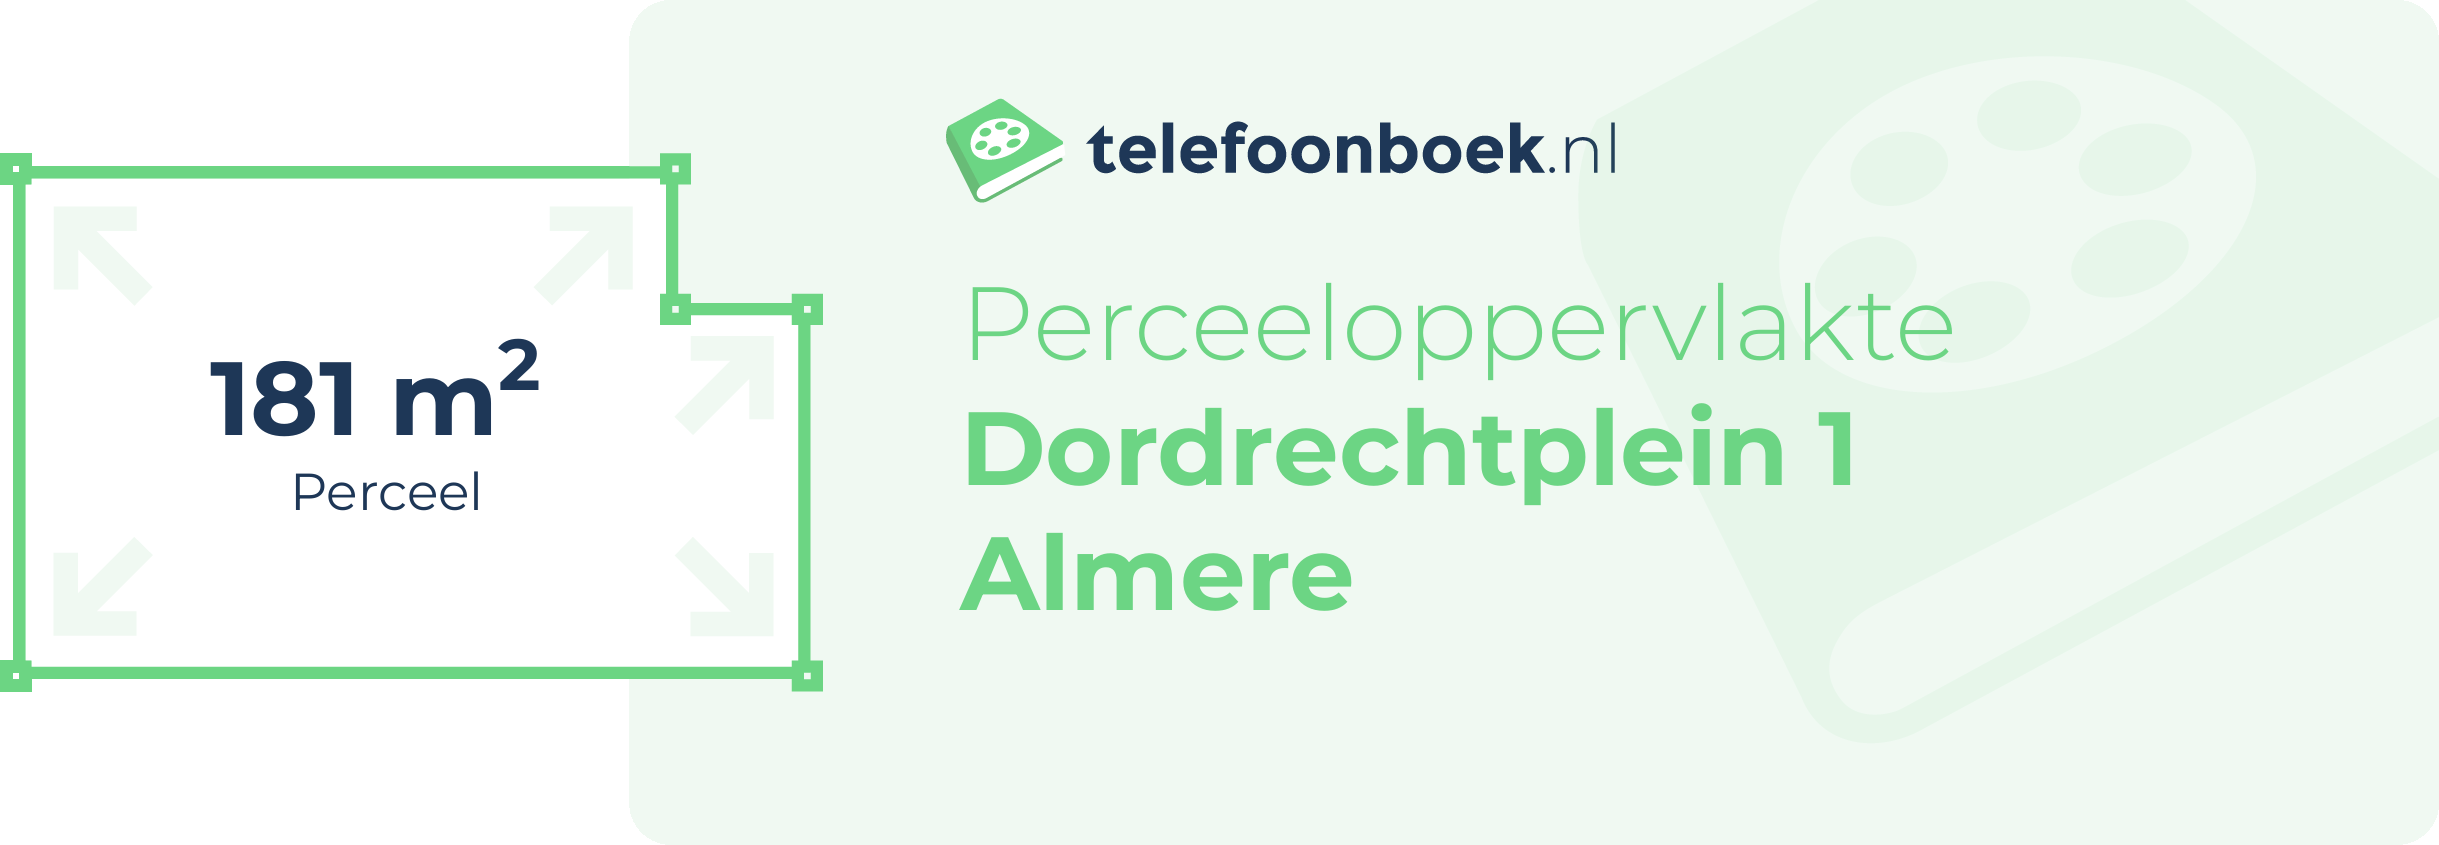 Perceeloppervlakte Dordrechtplein 1 Almere